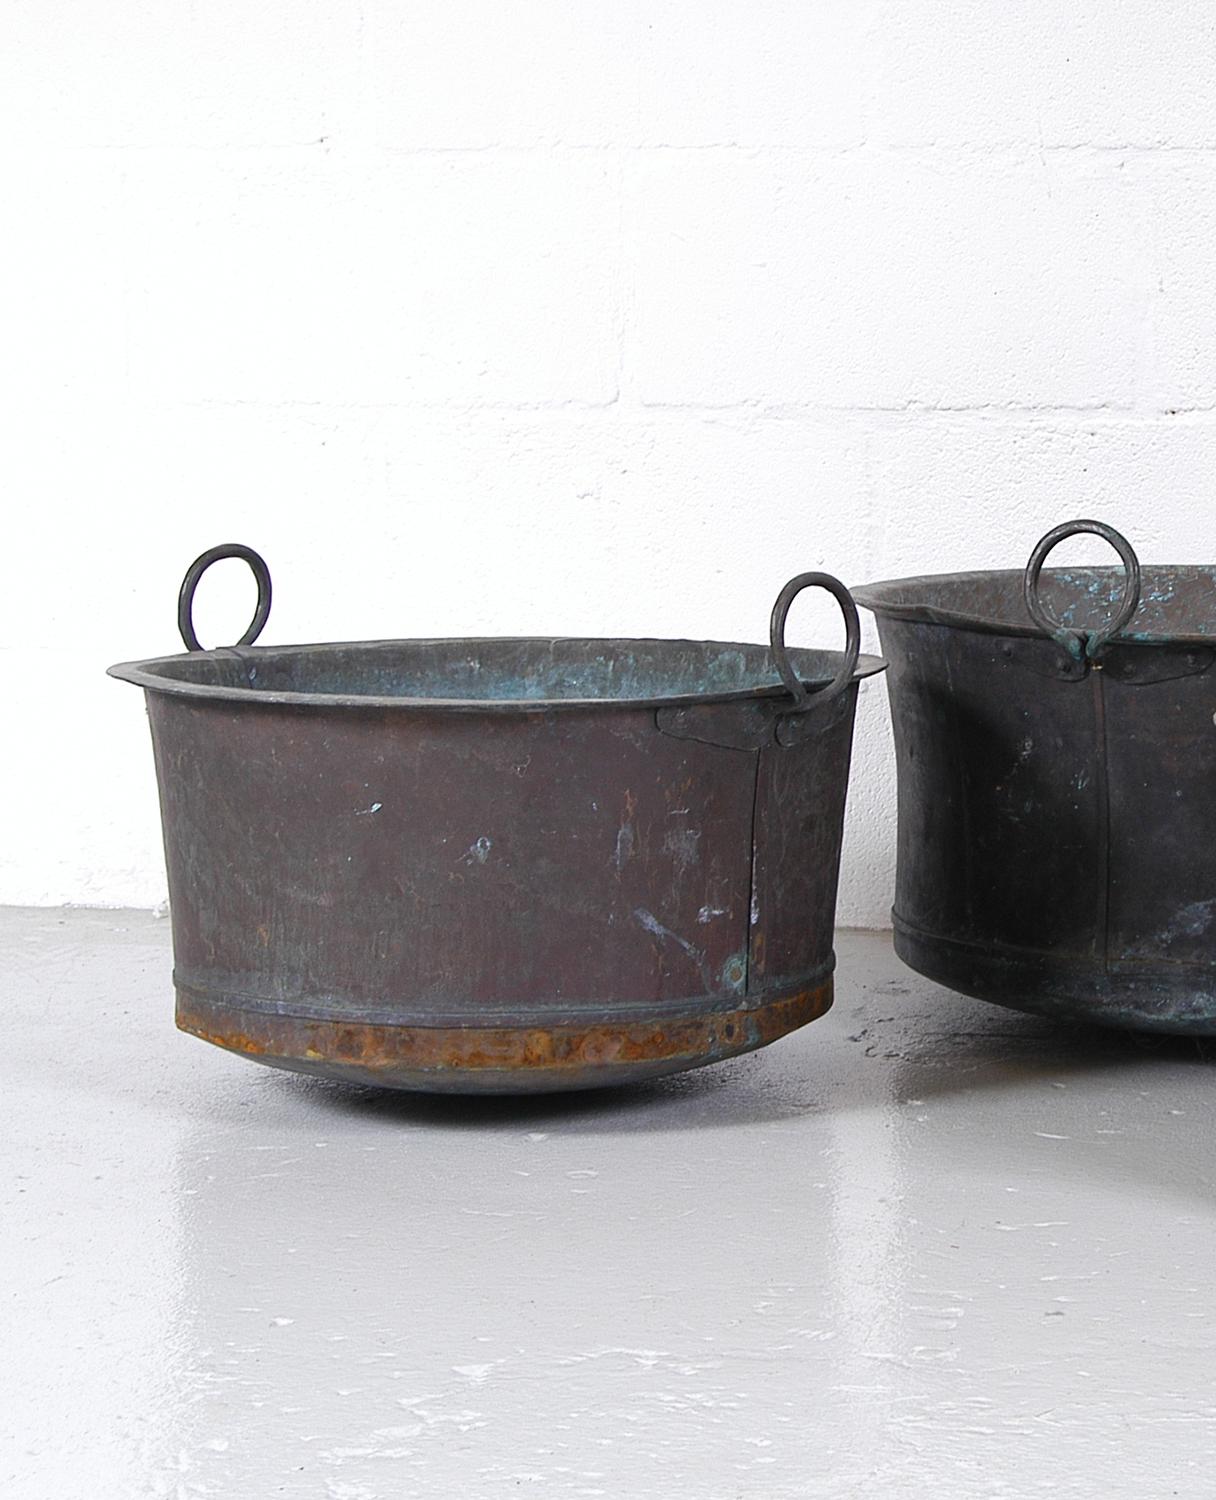 Rustic Large Antique Swedish Copper verdigris Wash Tub Pot Cauldron Urn Garden Planter